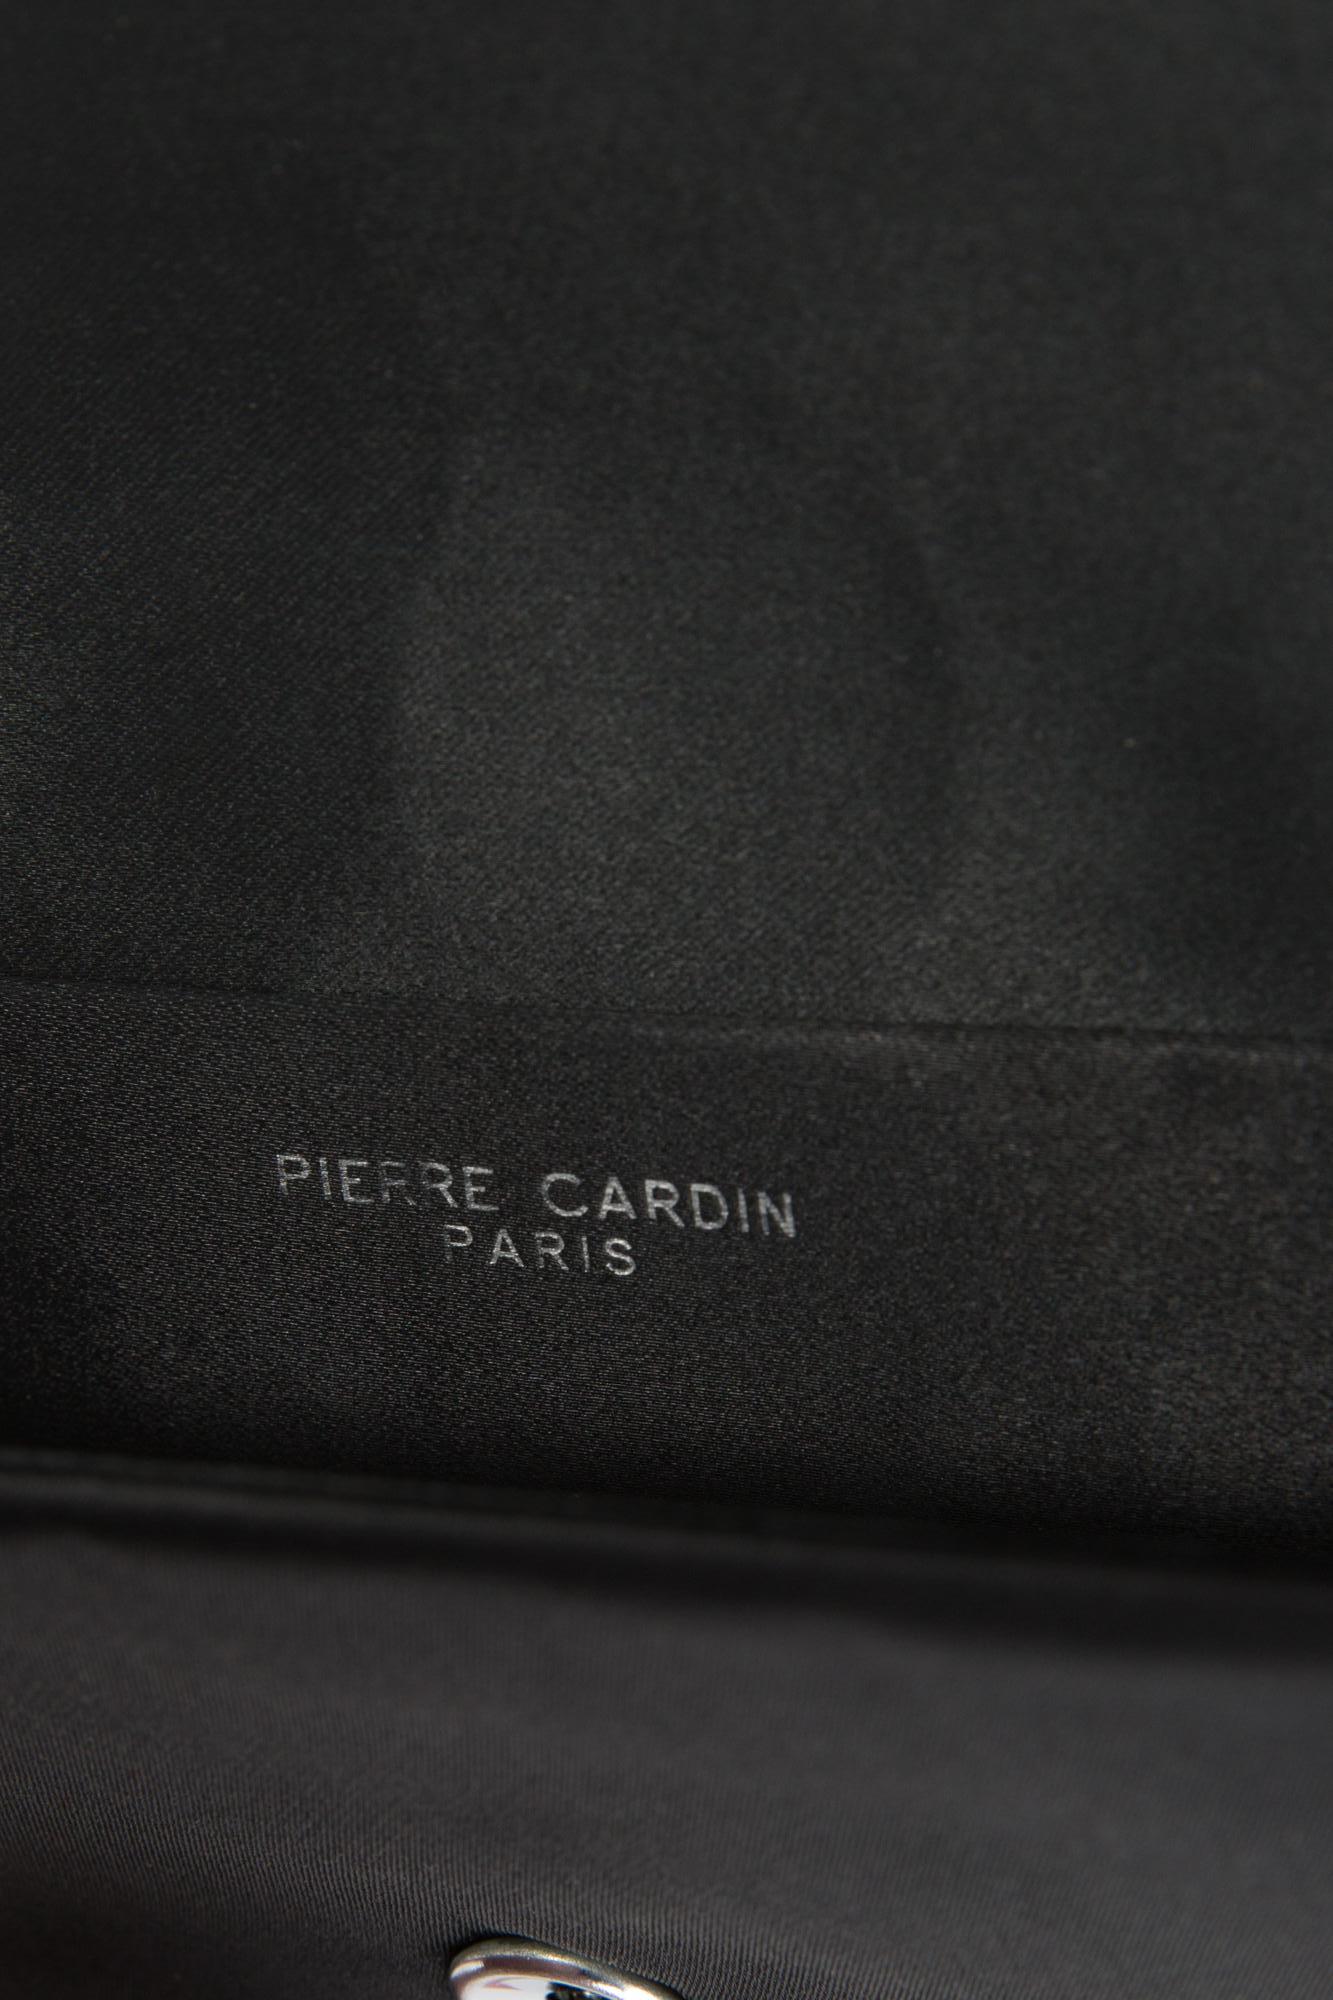 Pierre Cardin Black Silk Evening Clutch Bag For Sale 1